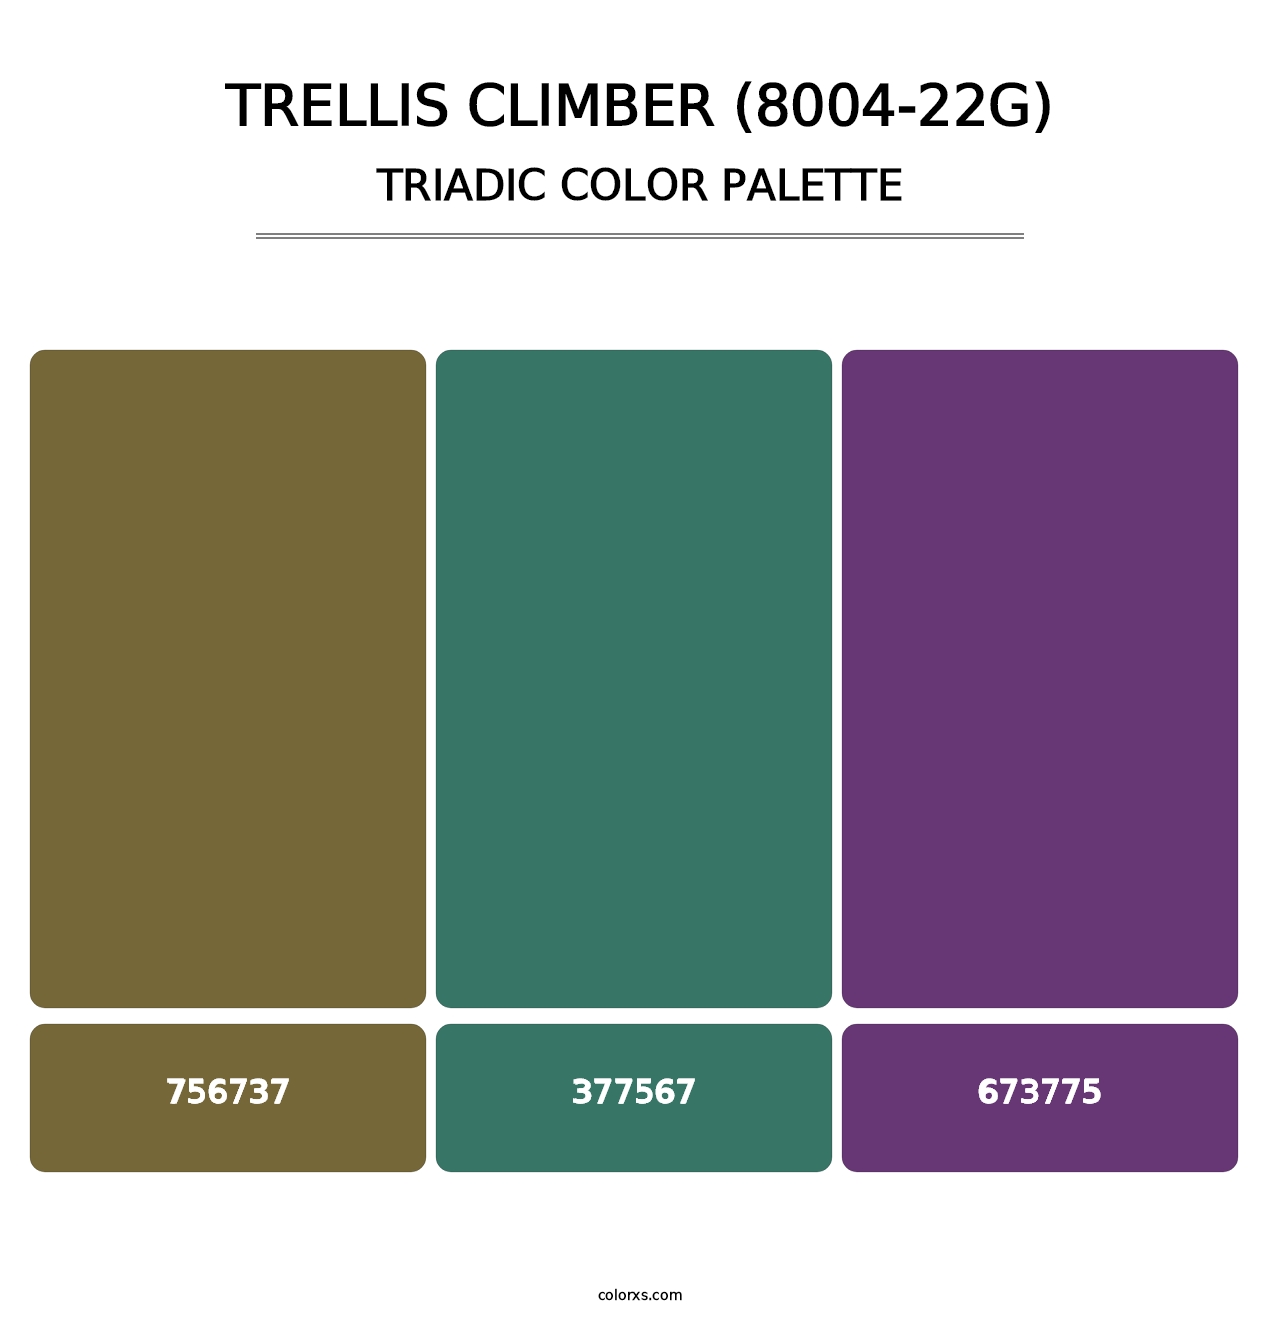 Trellis Climber (8004-22G) - Triadic Color Palette